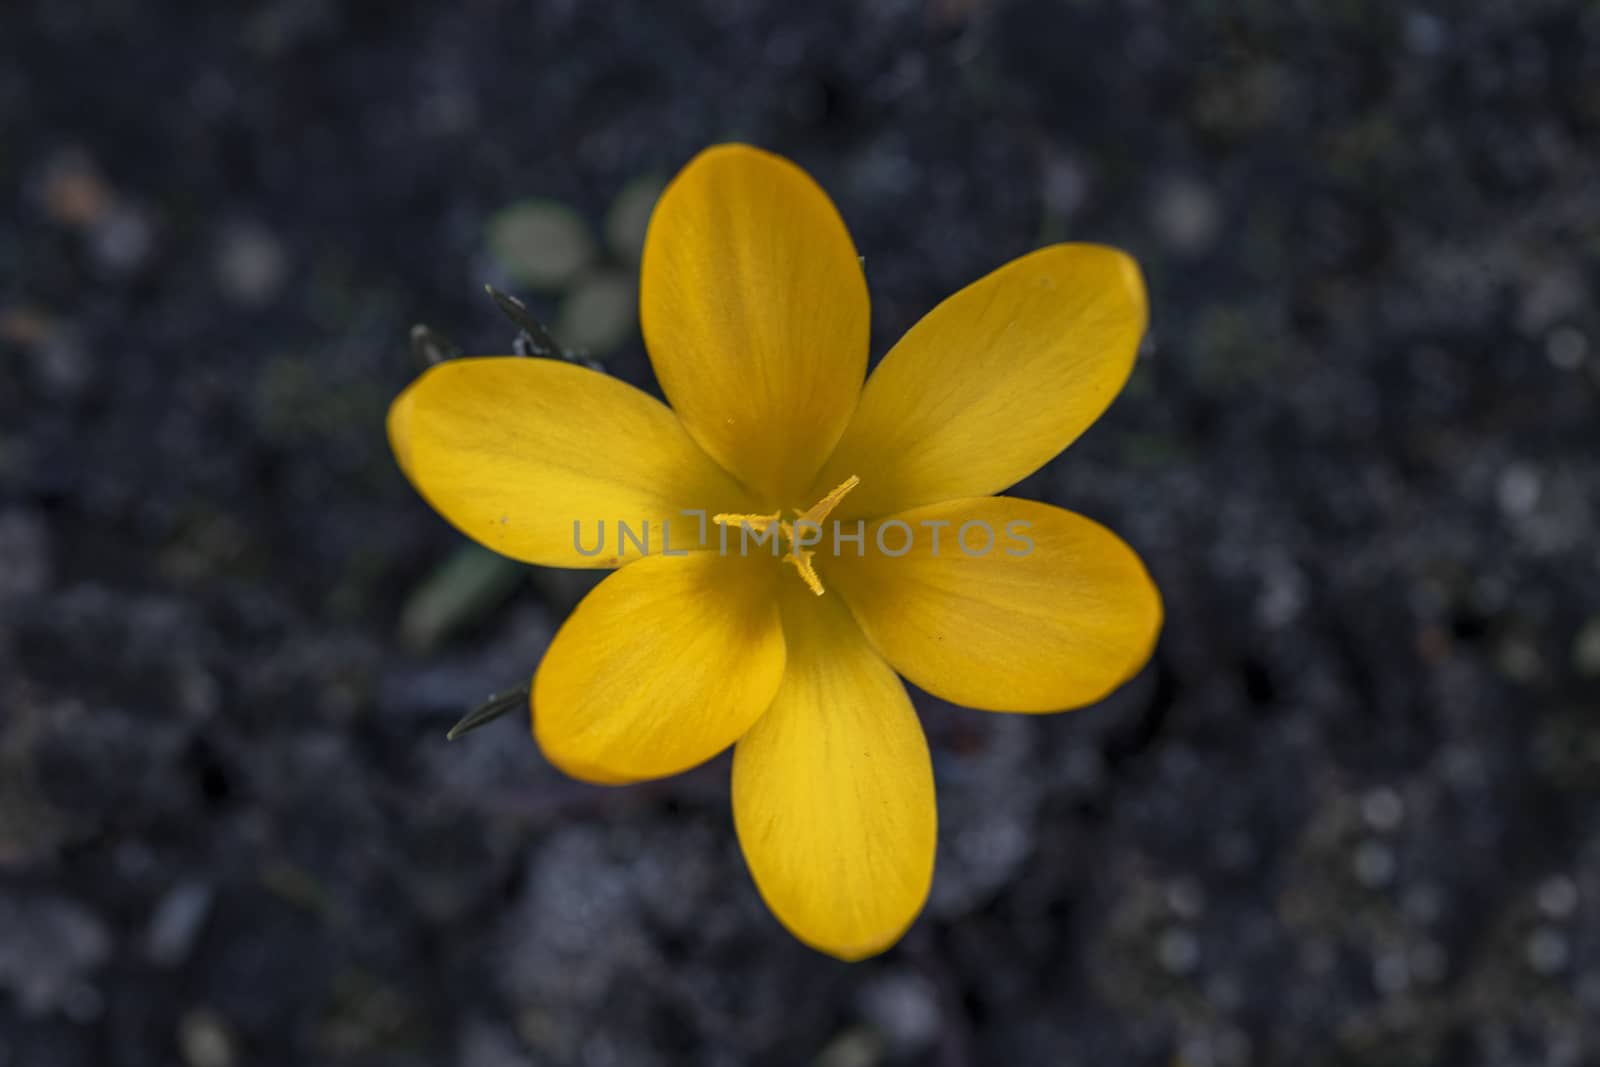 Closeup of a yellow and golden crocus flower against a dark soil background